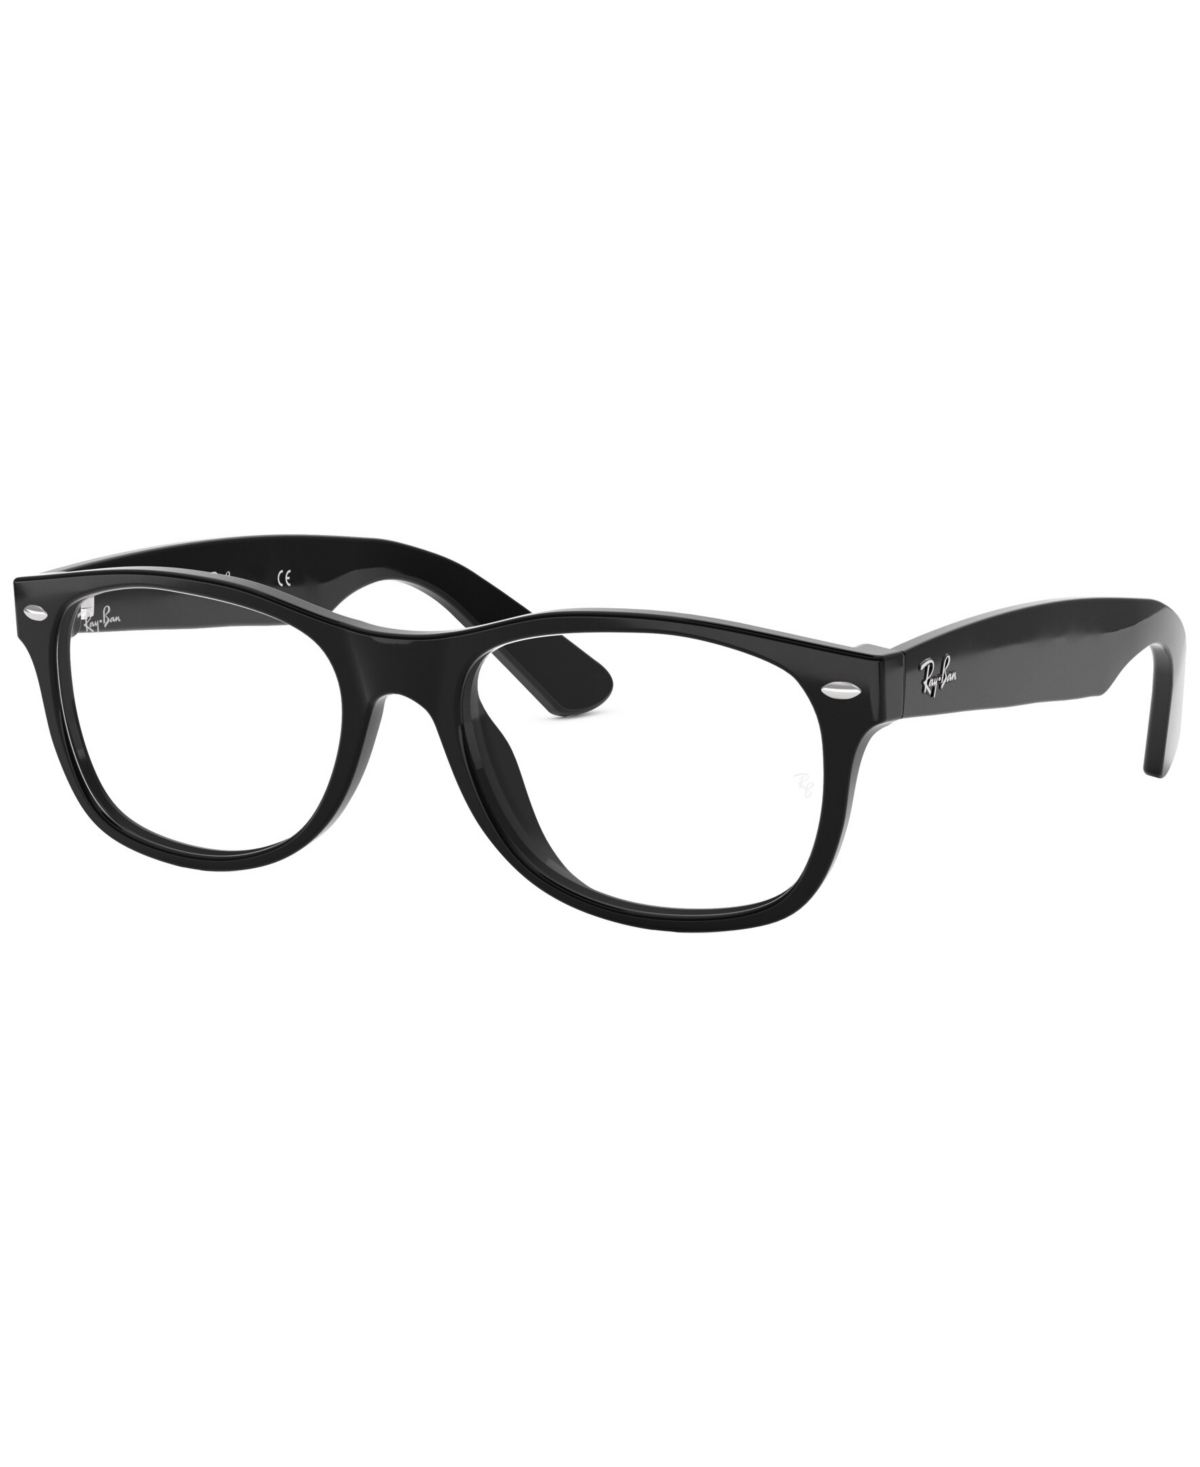 RX5184 Unisex Square Eyeglasses - Black